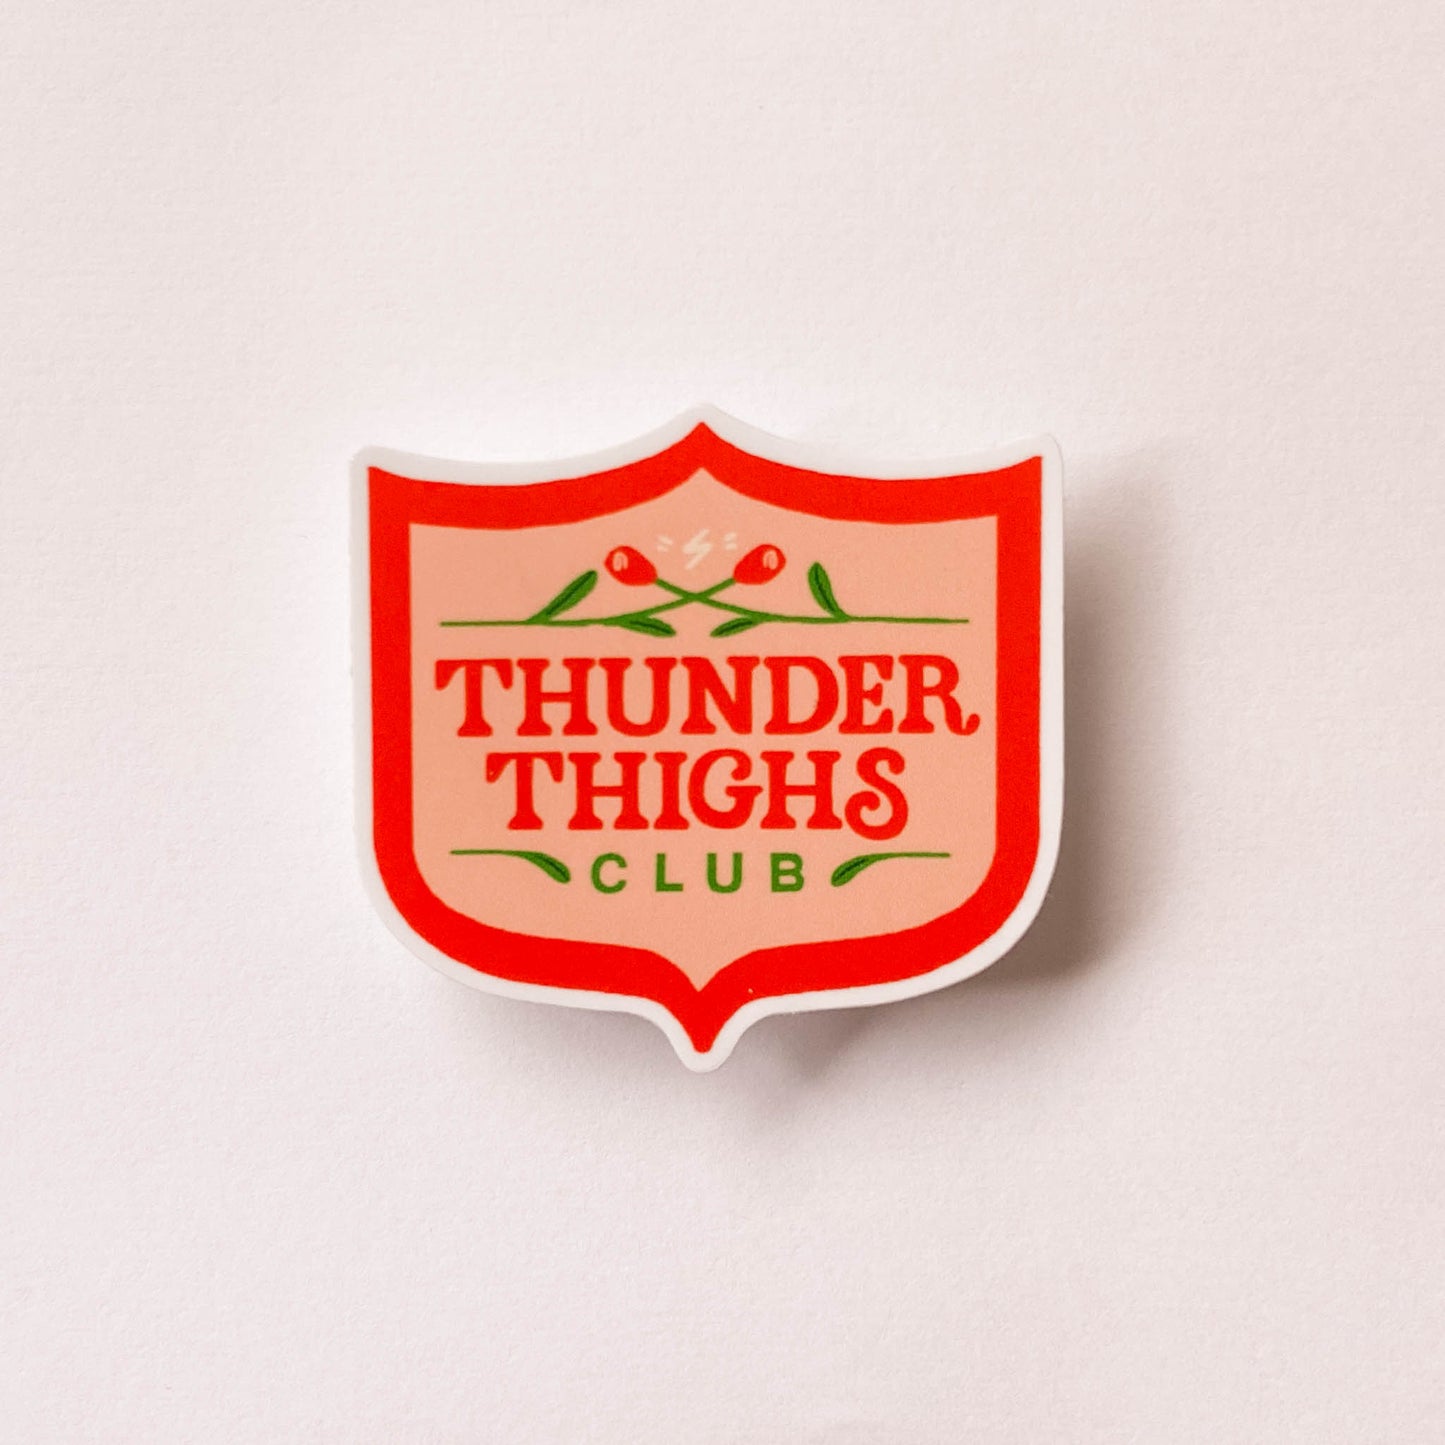 Thunder Thighs Club Sticker, 2x2 in.